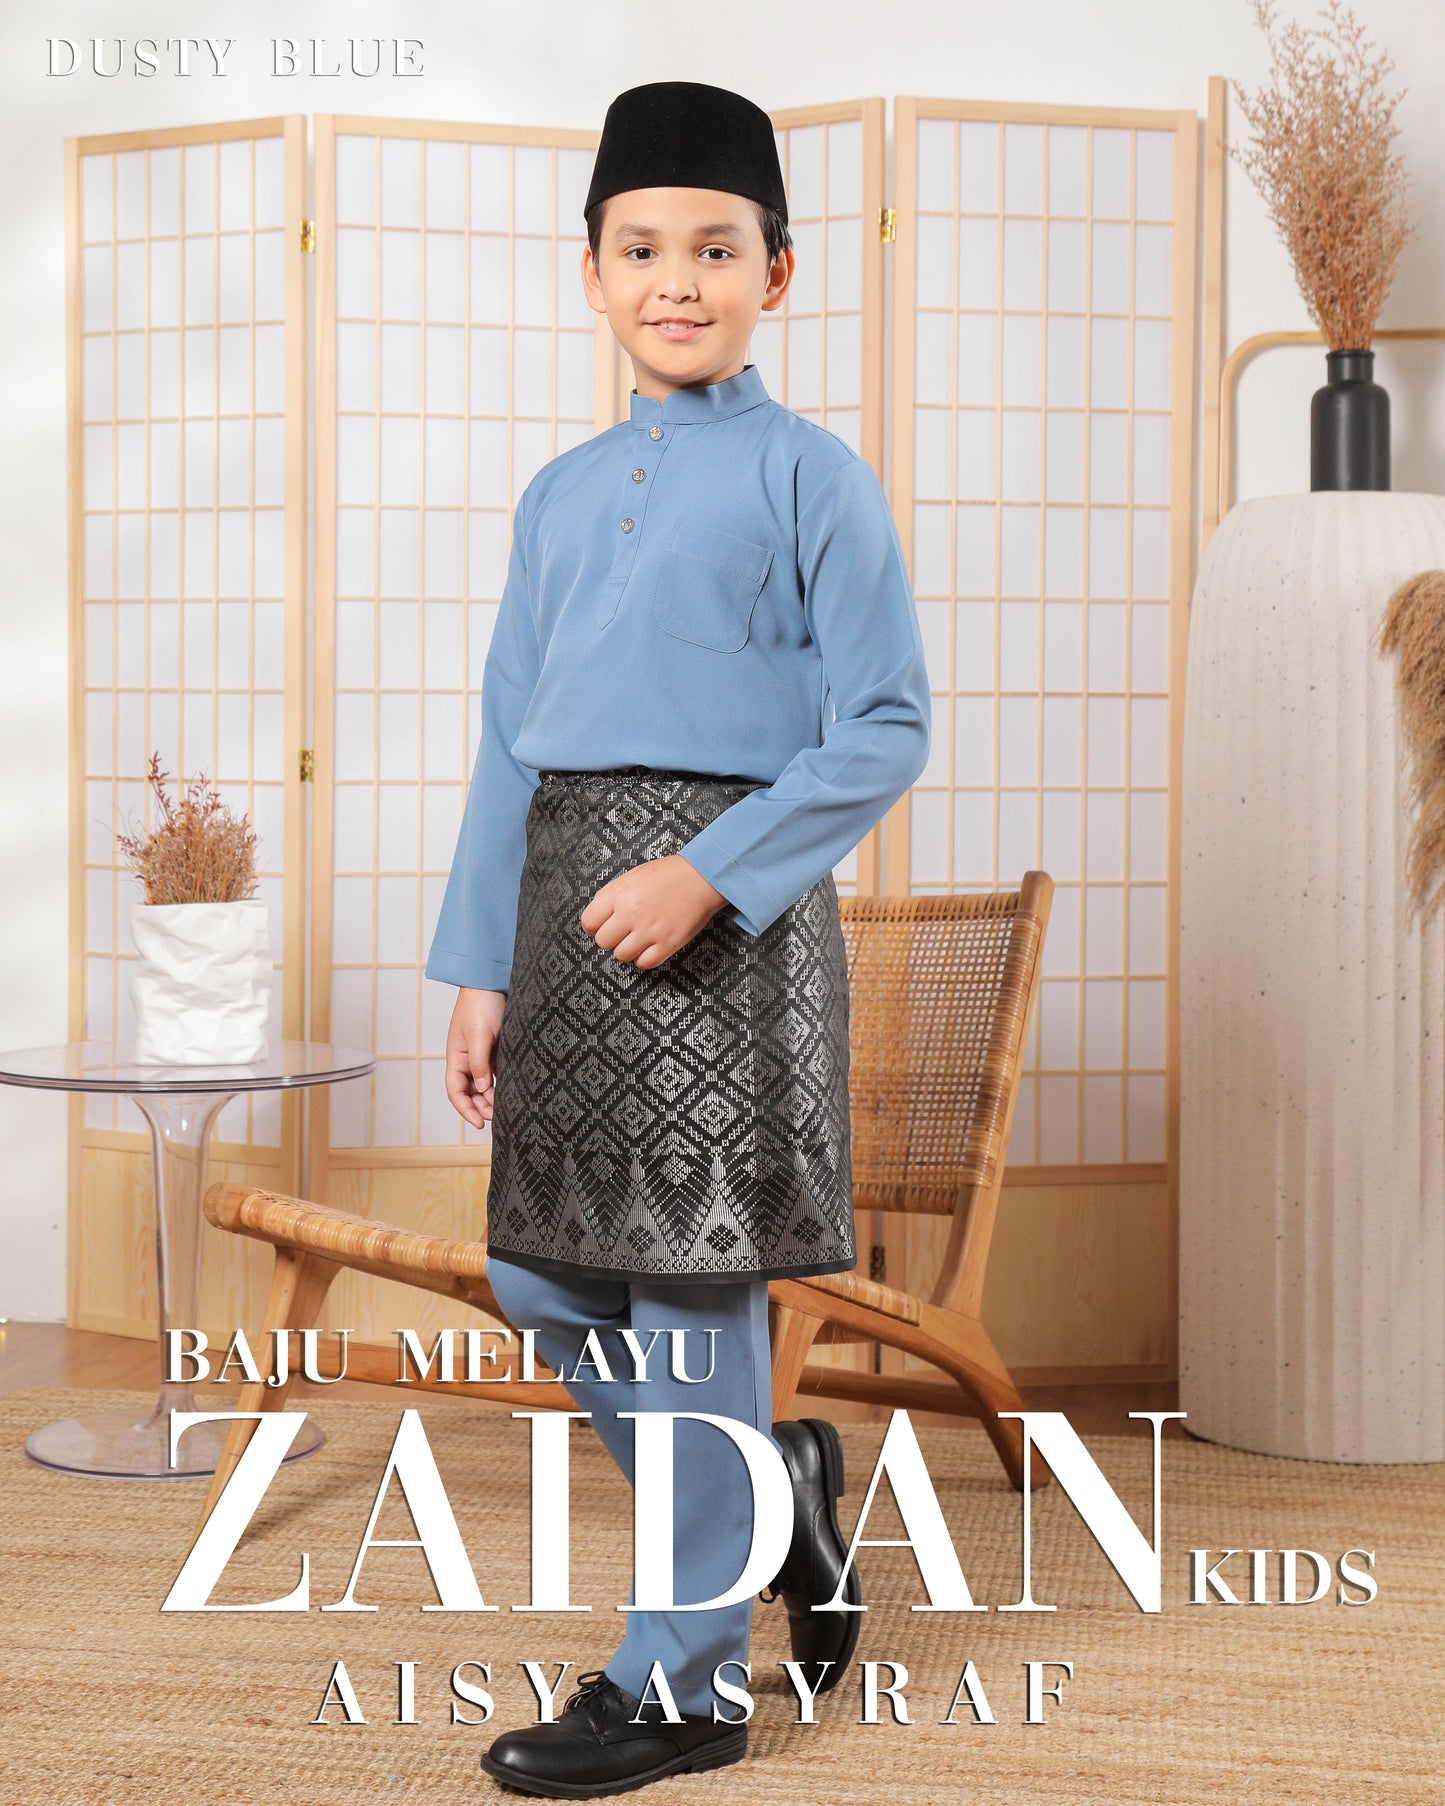 Baju Melayu Zaidan Kids - Dusty Blue